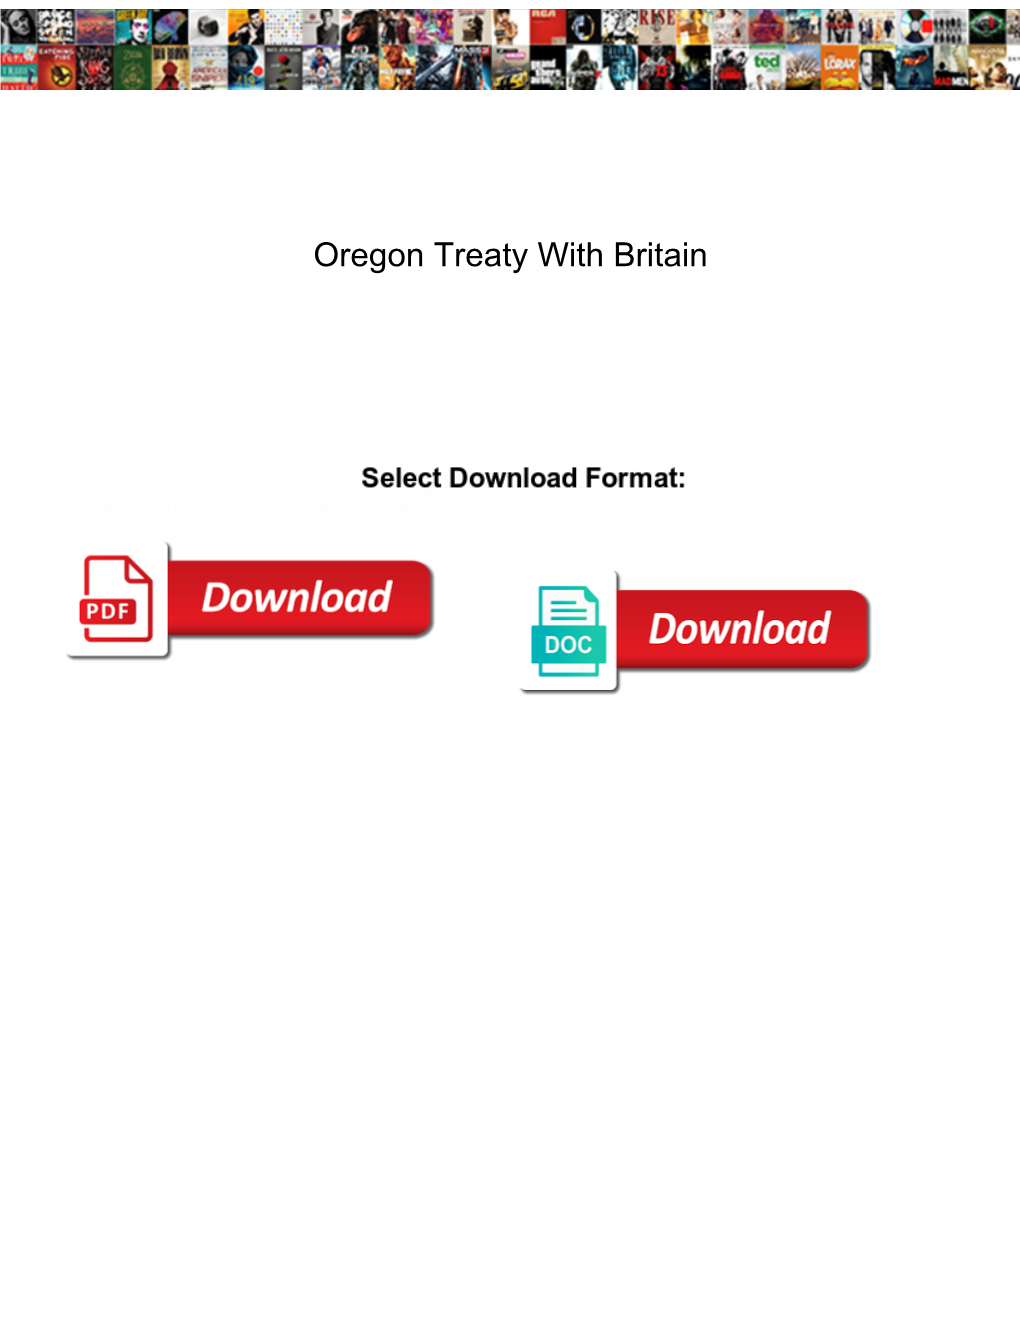 Oregon Treaty with Britain